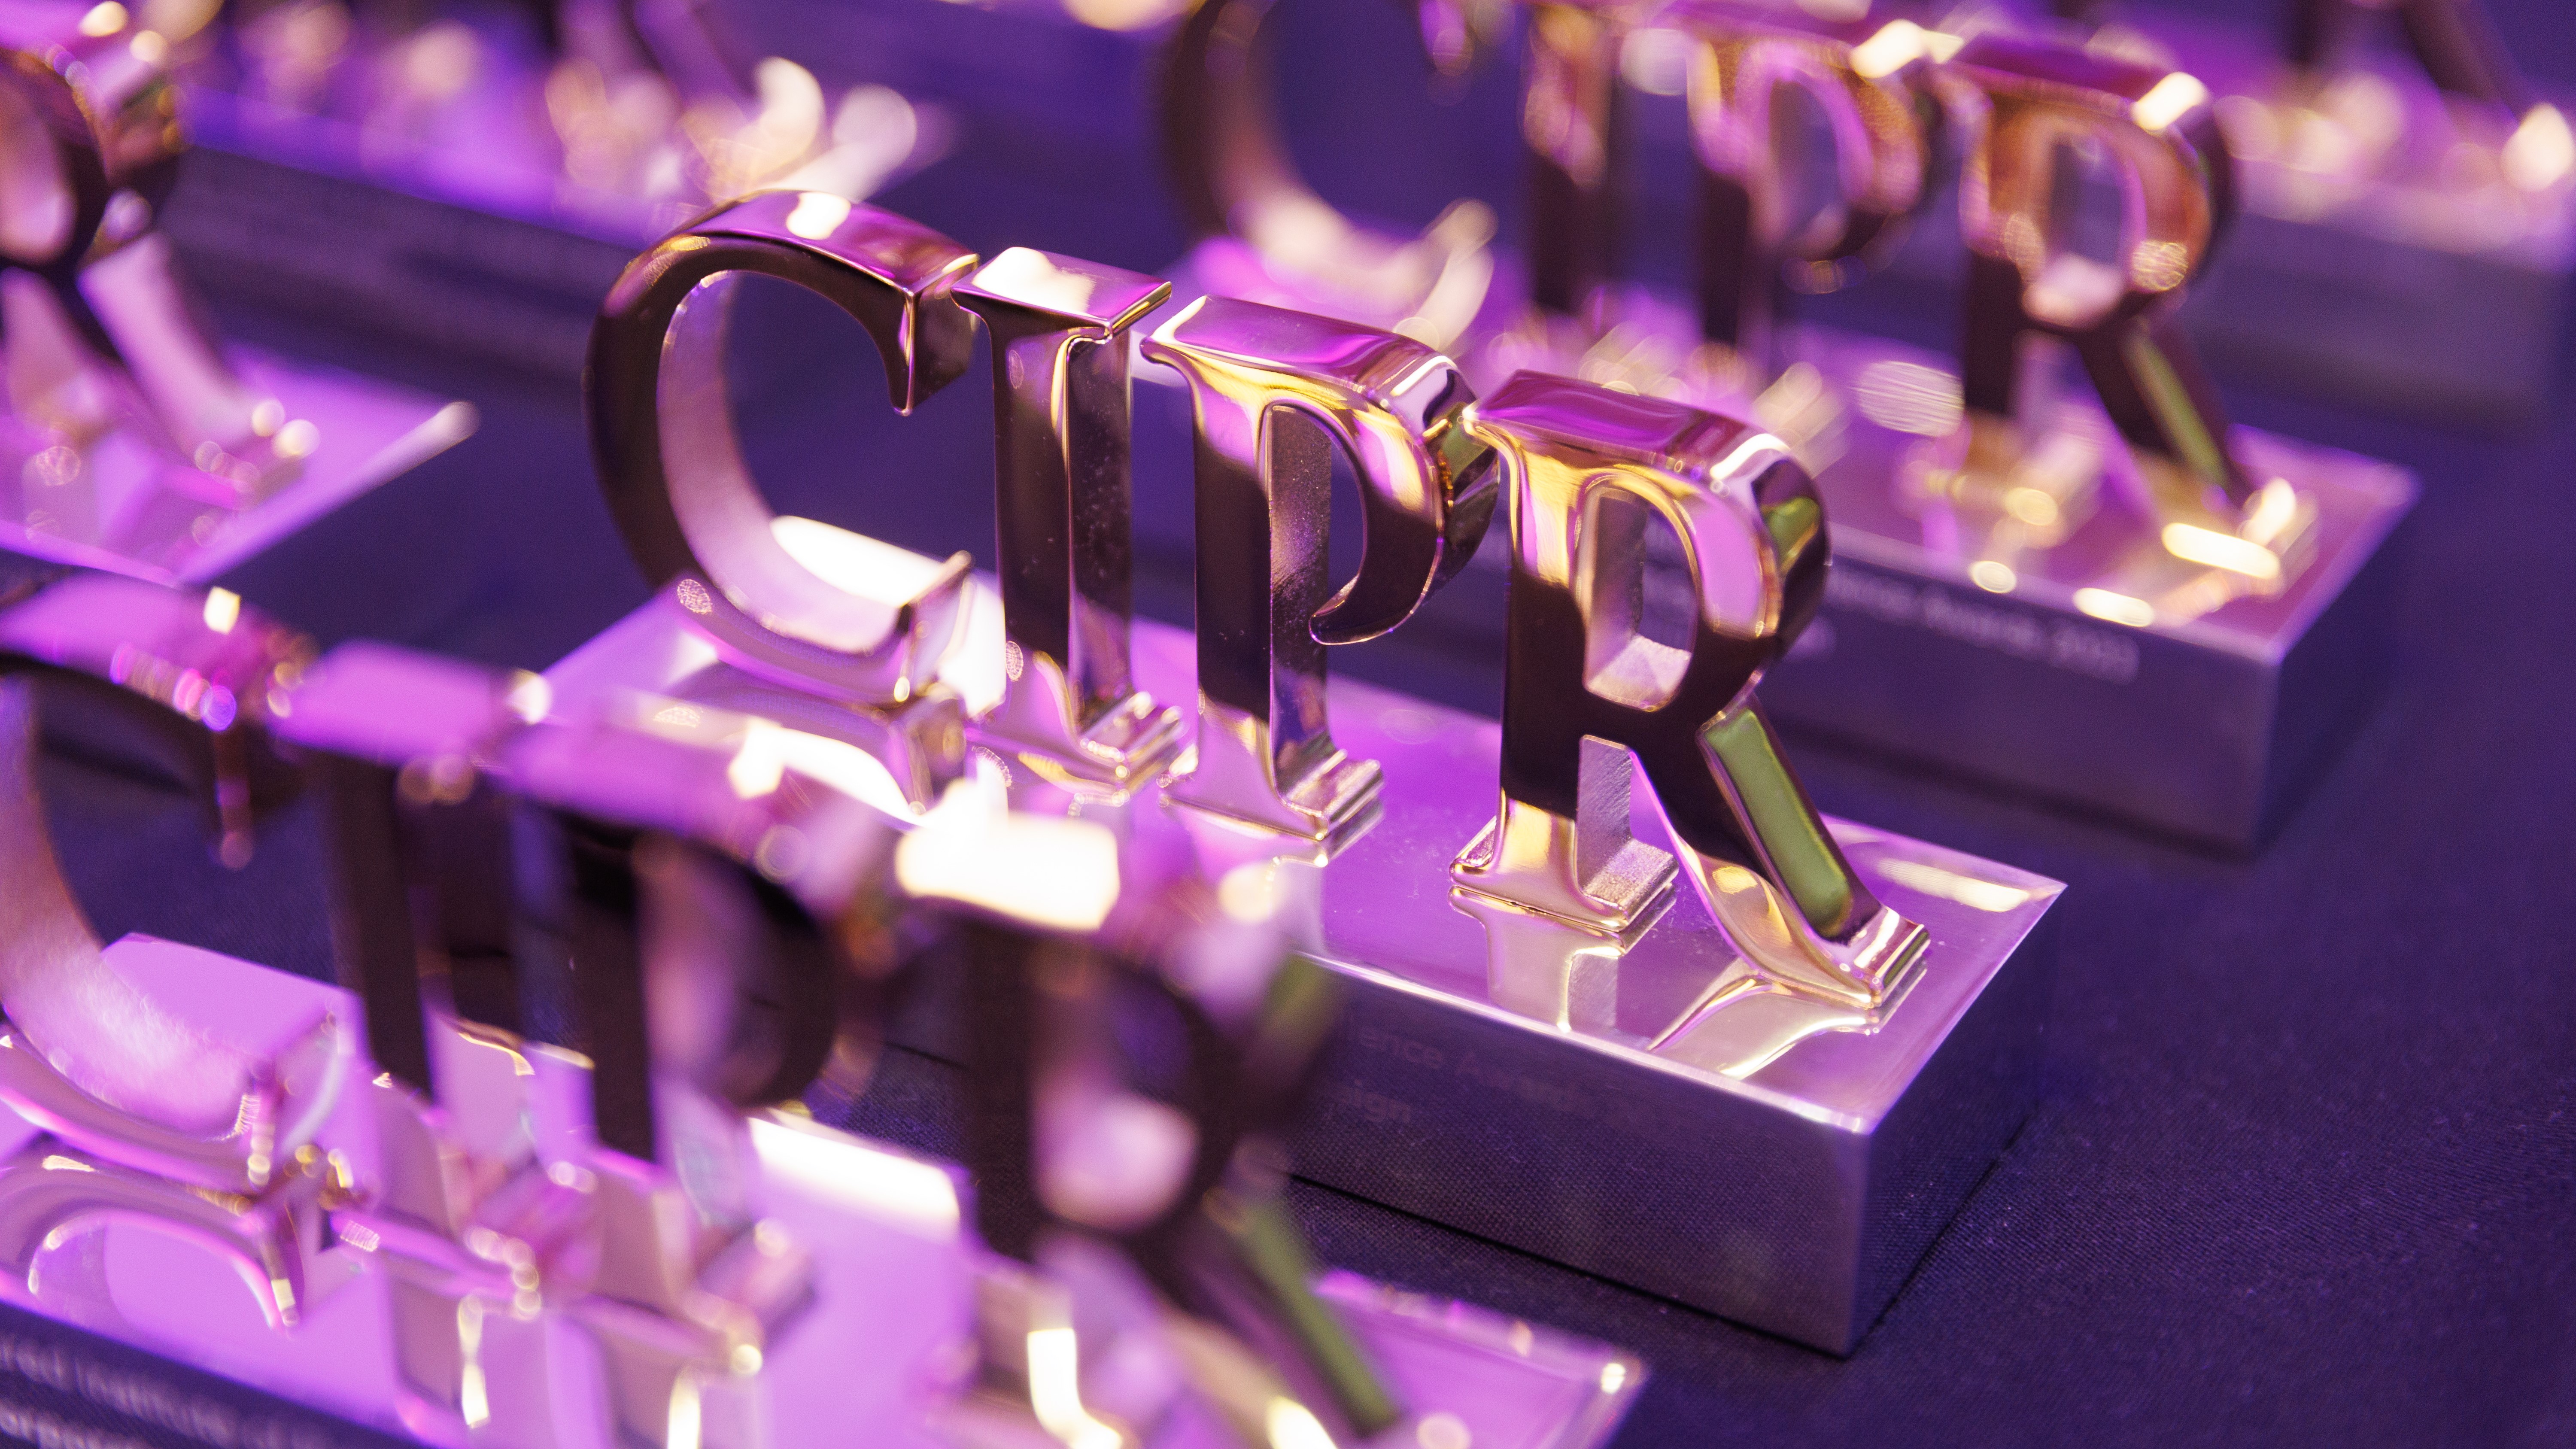 the CIPR award trophy